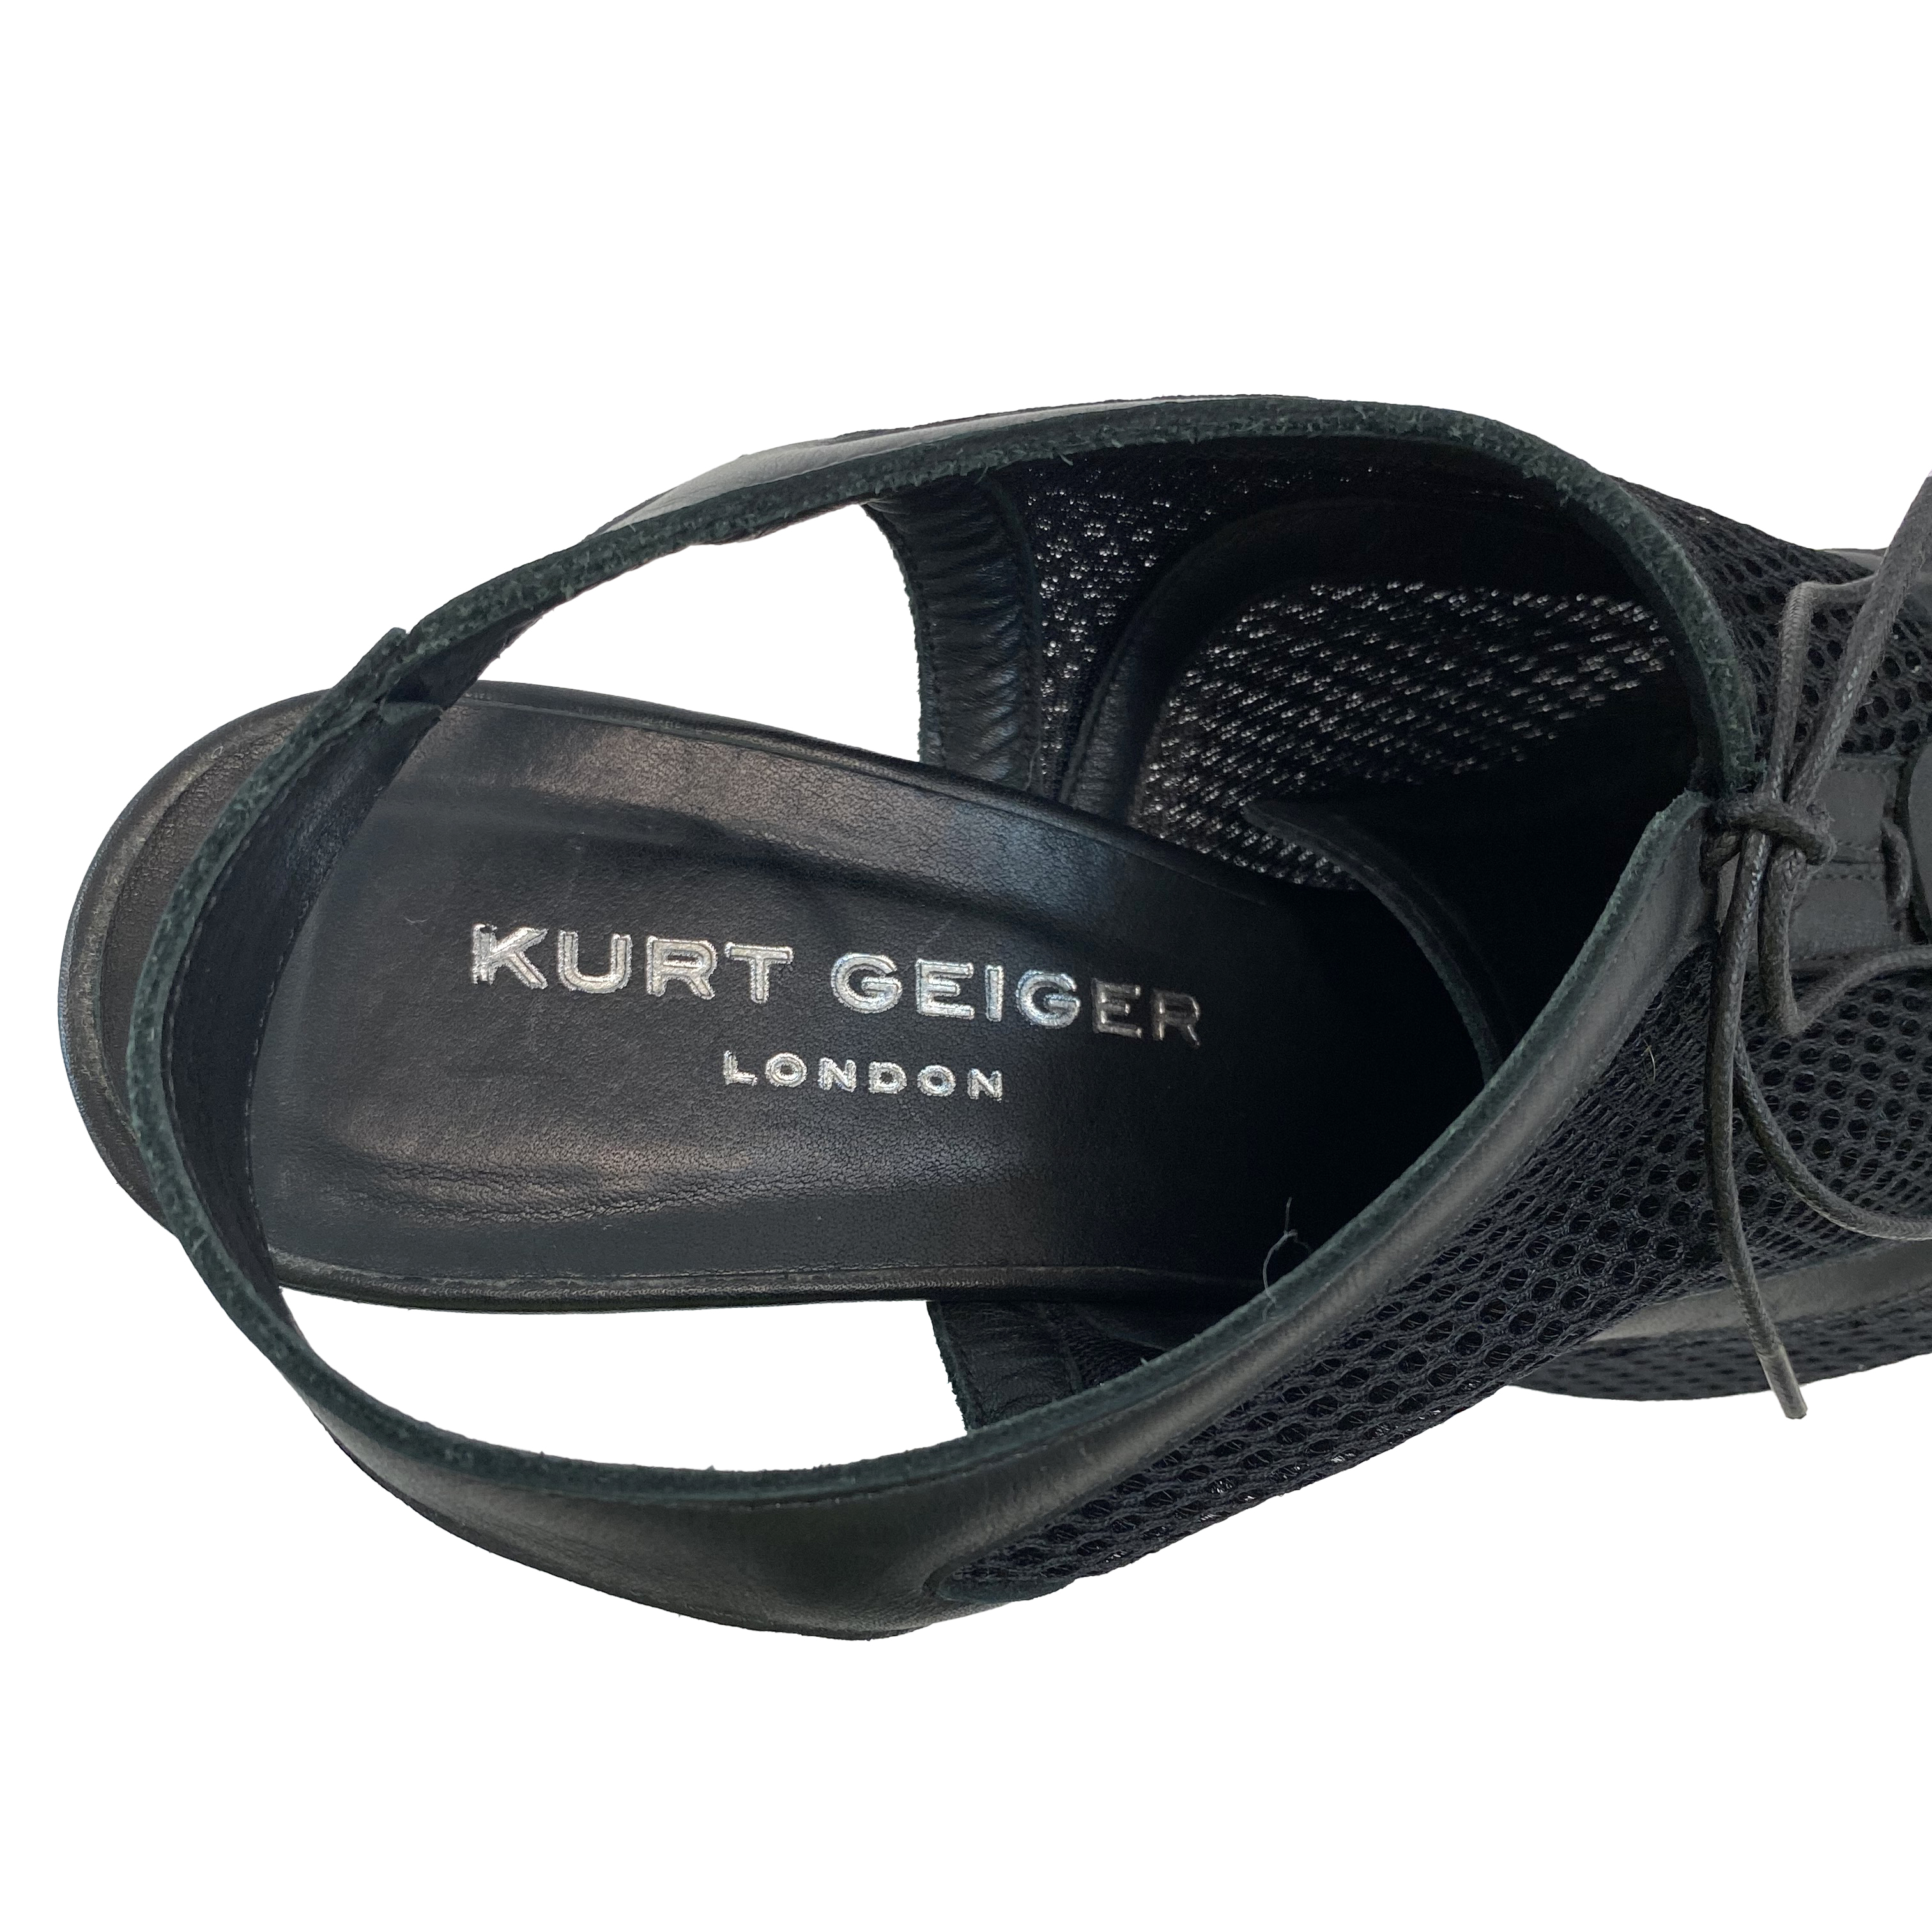 Kurt Geiger London Netted Lace-up Platform Wedge Peep-toes